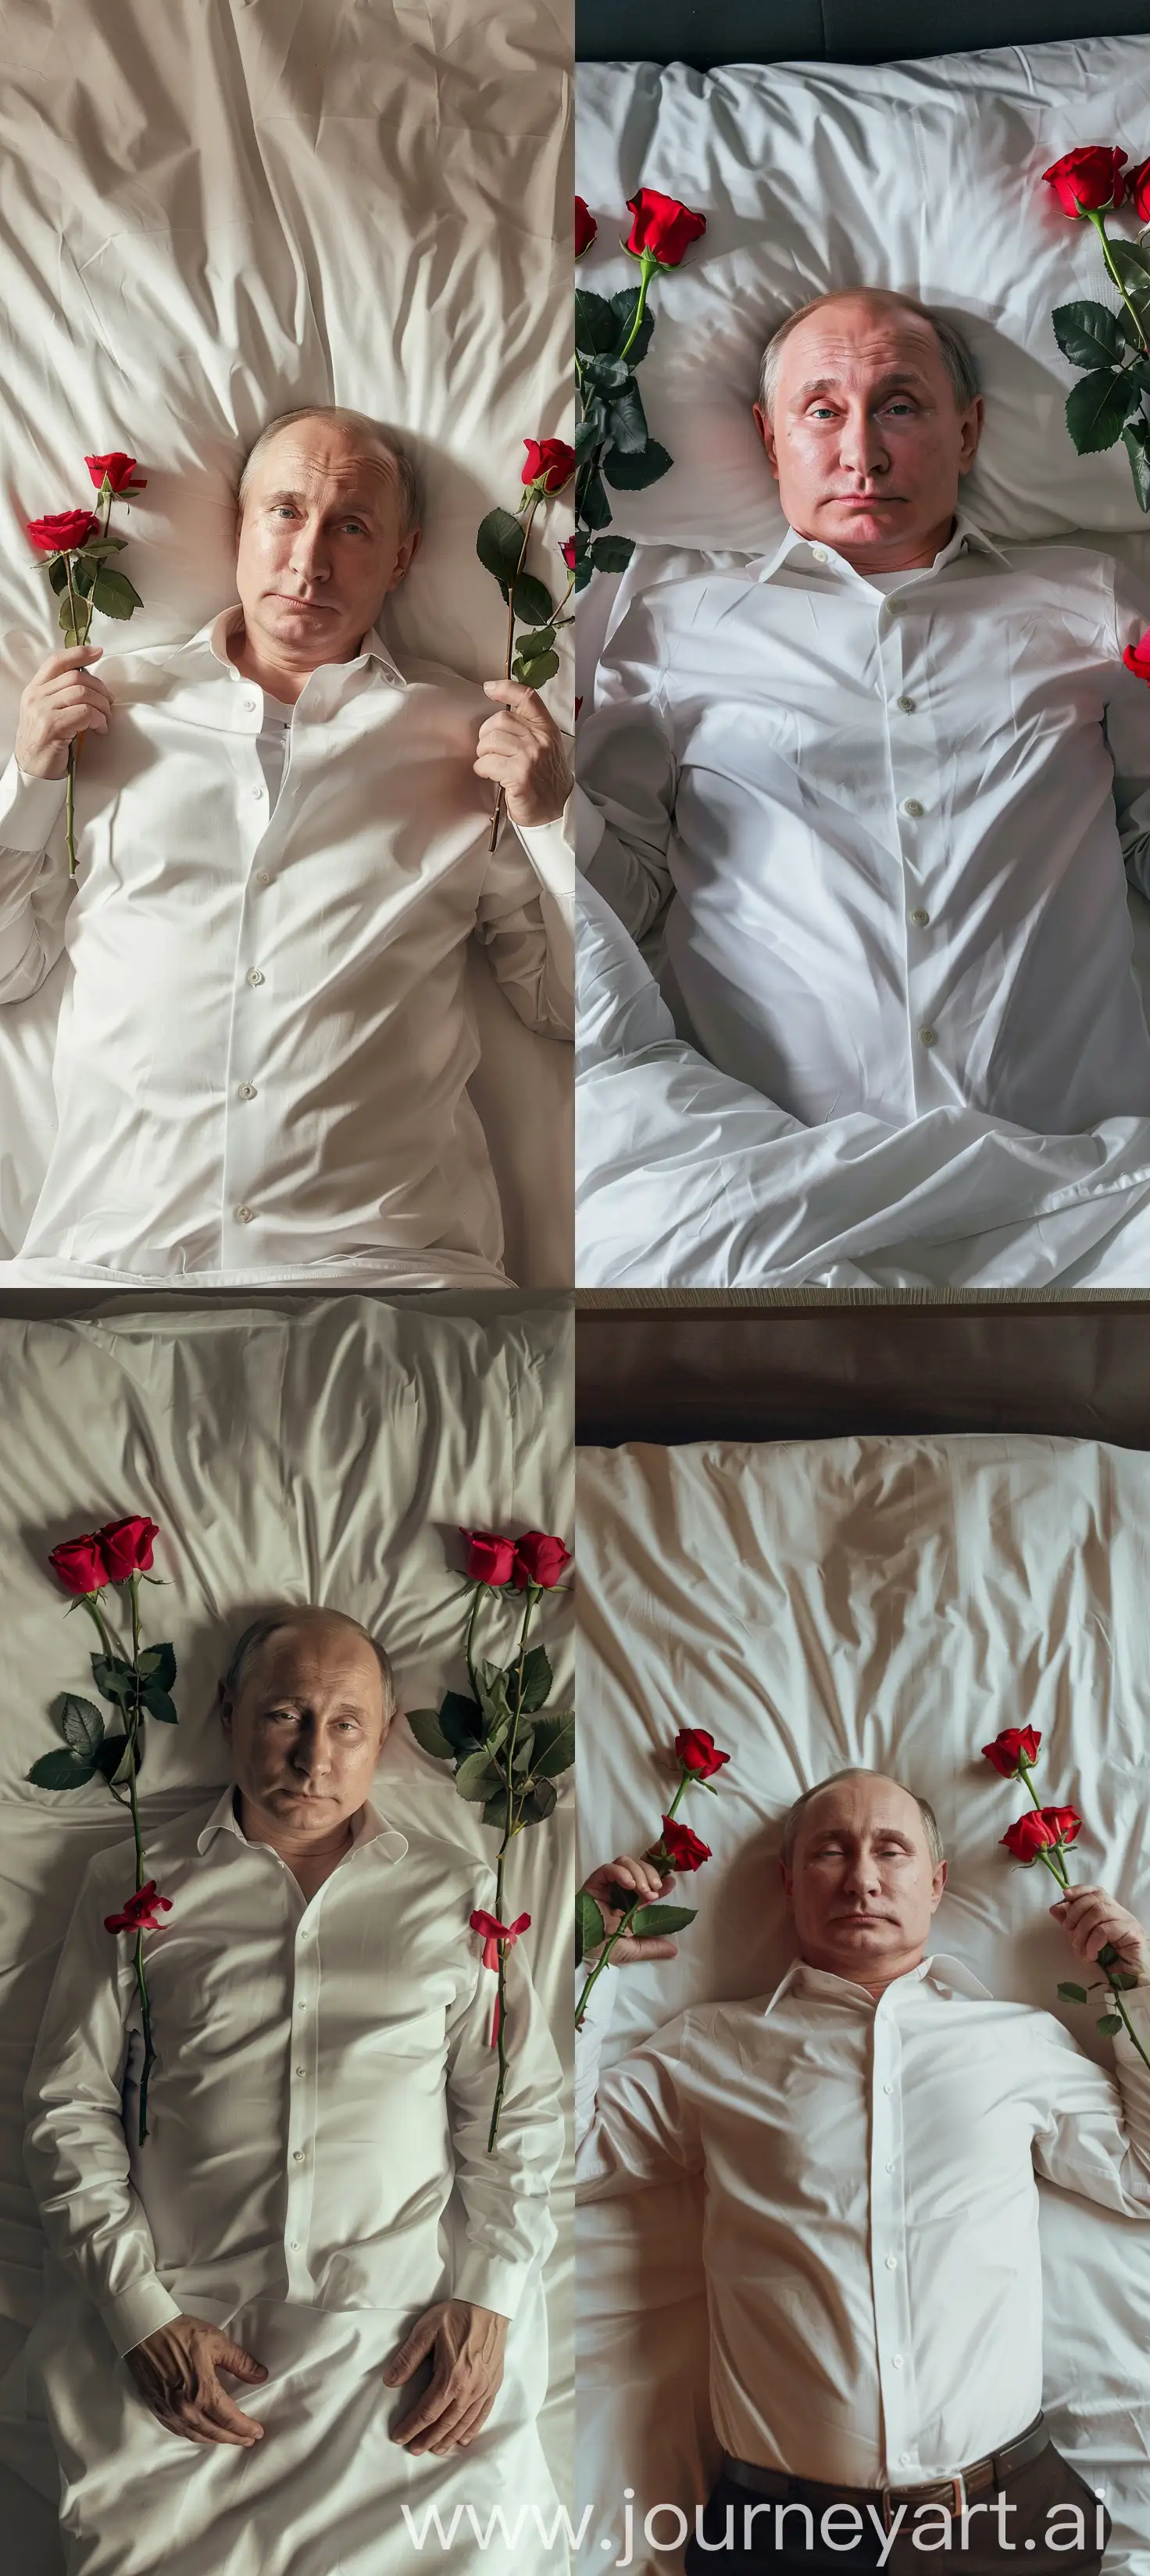 Vladimir-Putin-Romantic-Gesture-Red-Roses-in-Bed